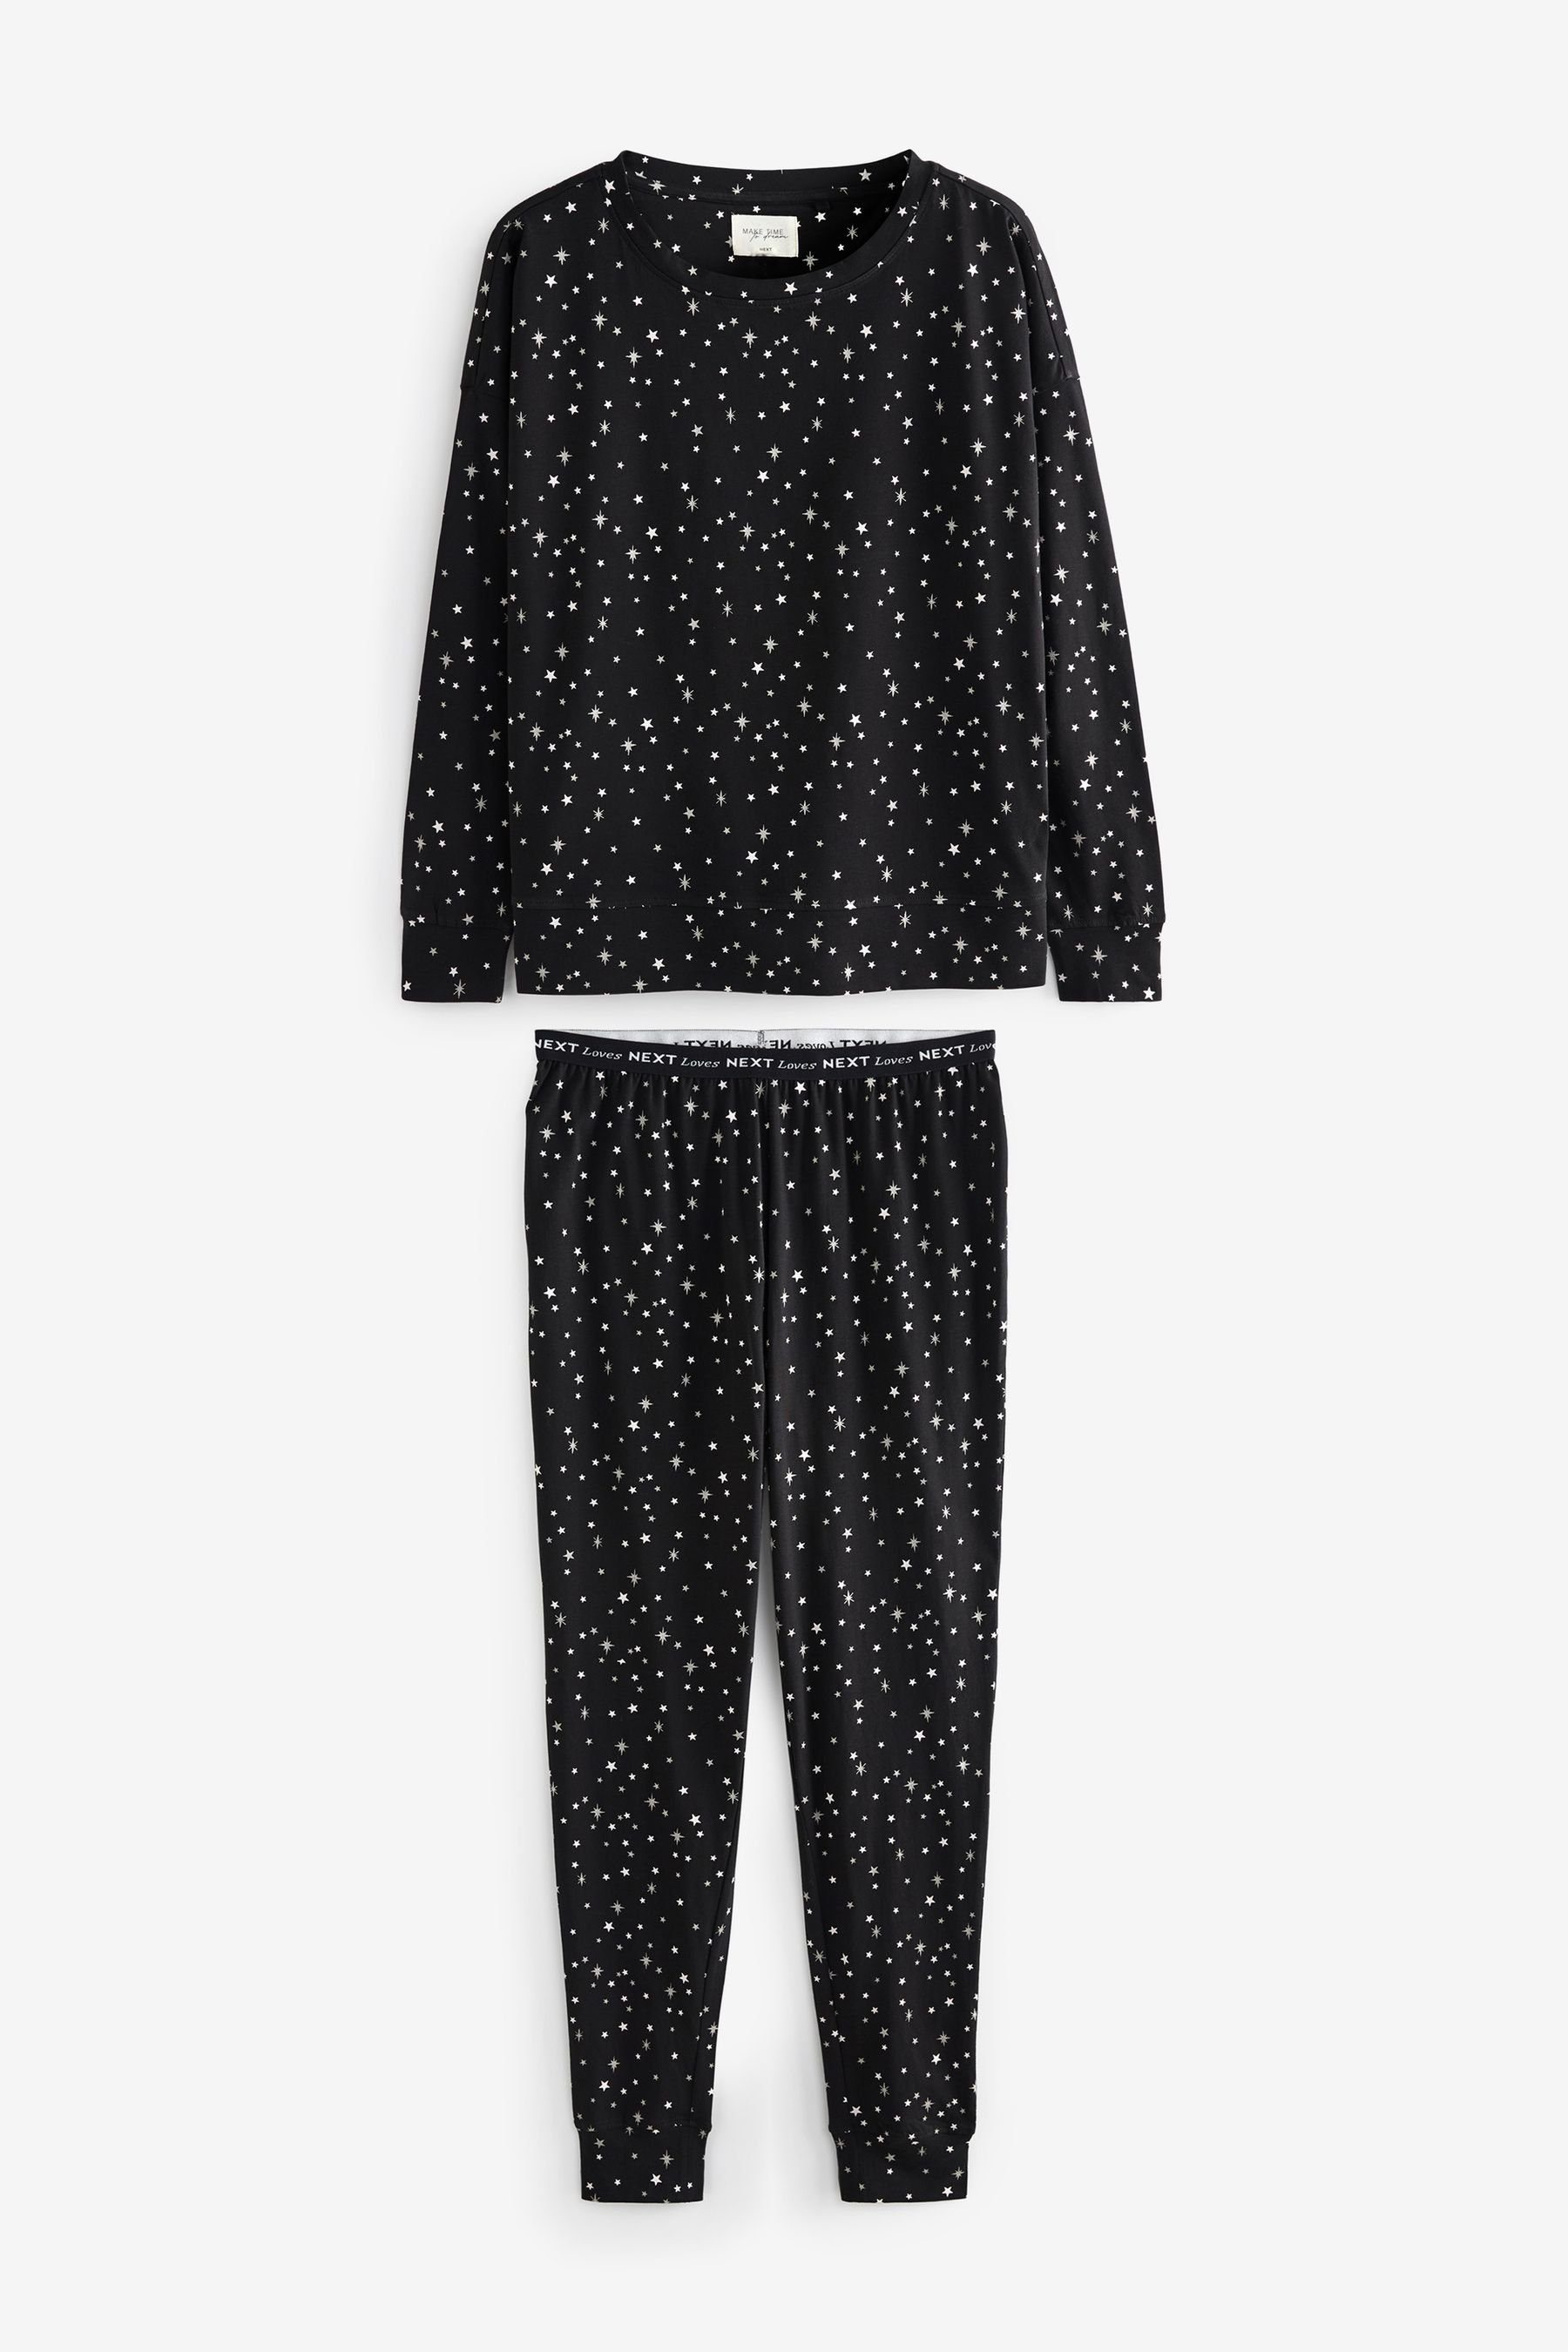 Next Pyjama Langärmeliger Pyjama aus Baumwolle (2 tlg) Black Star